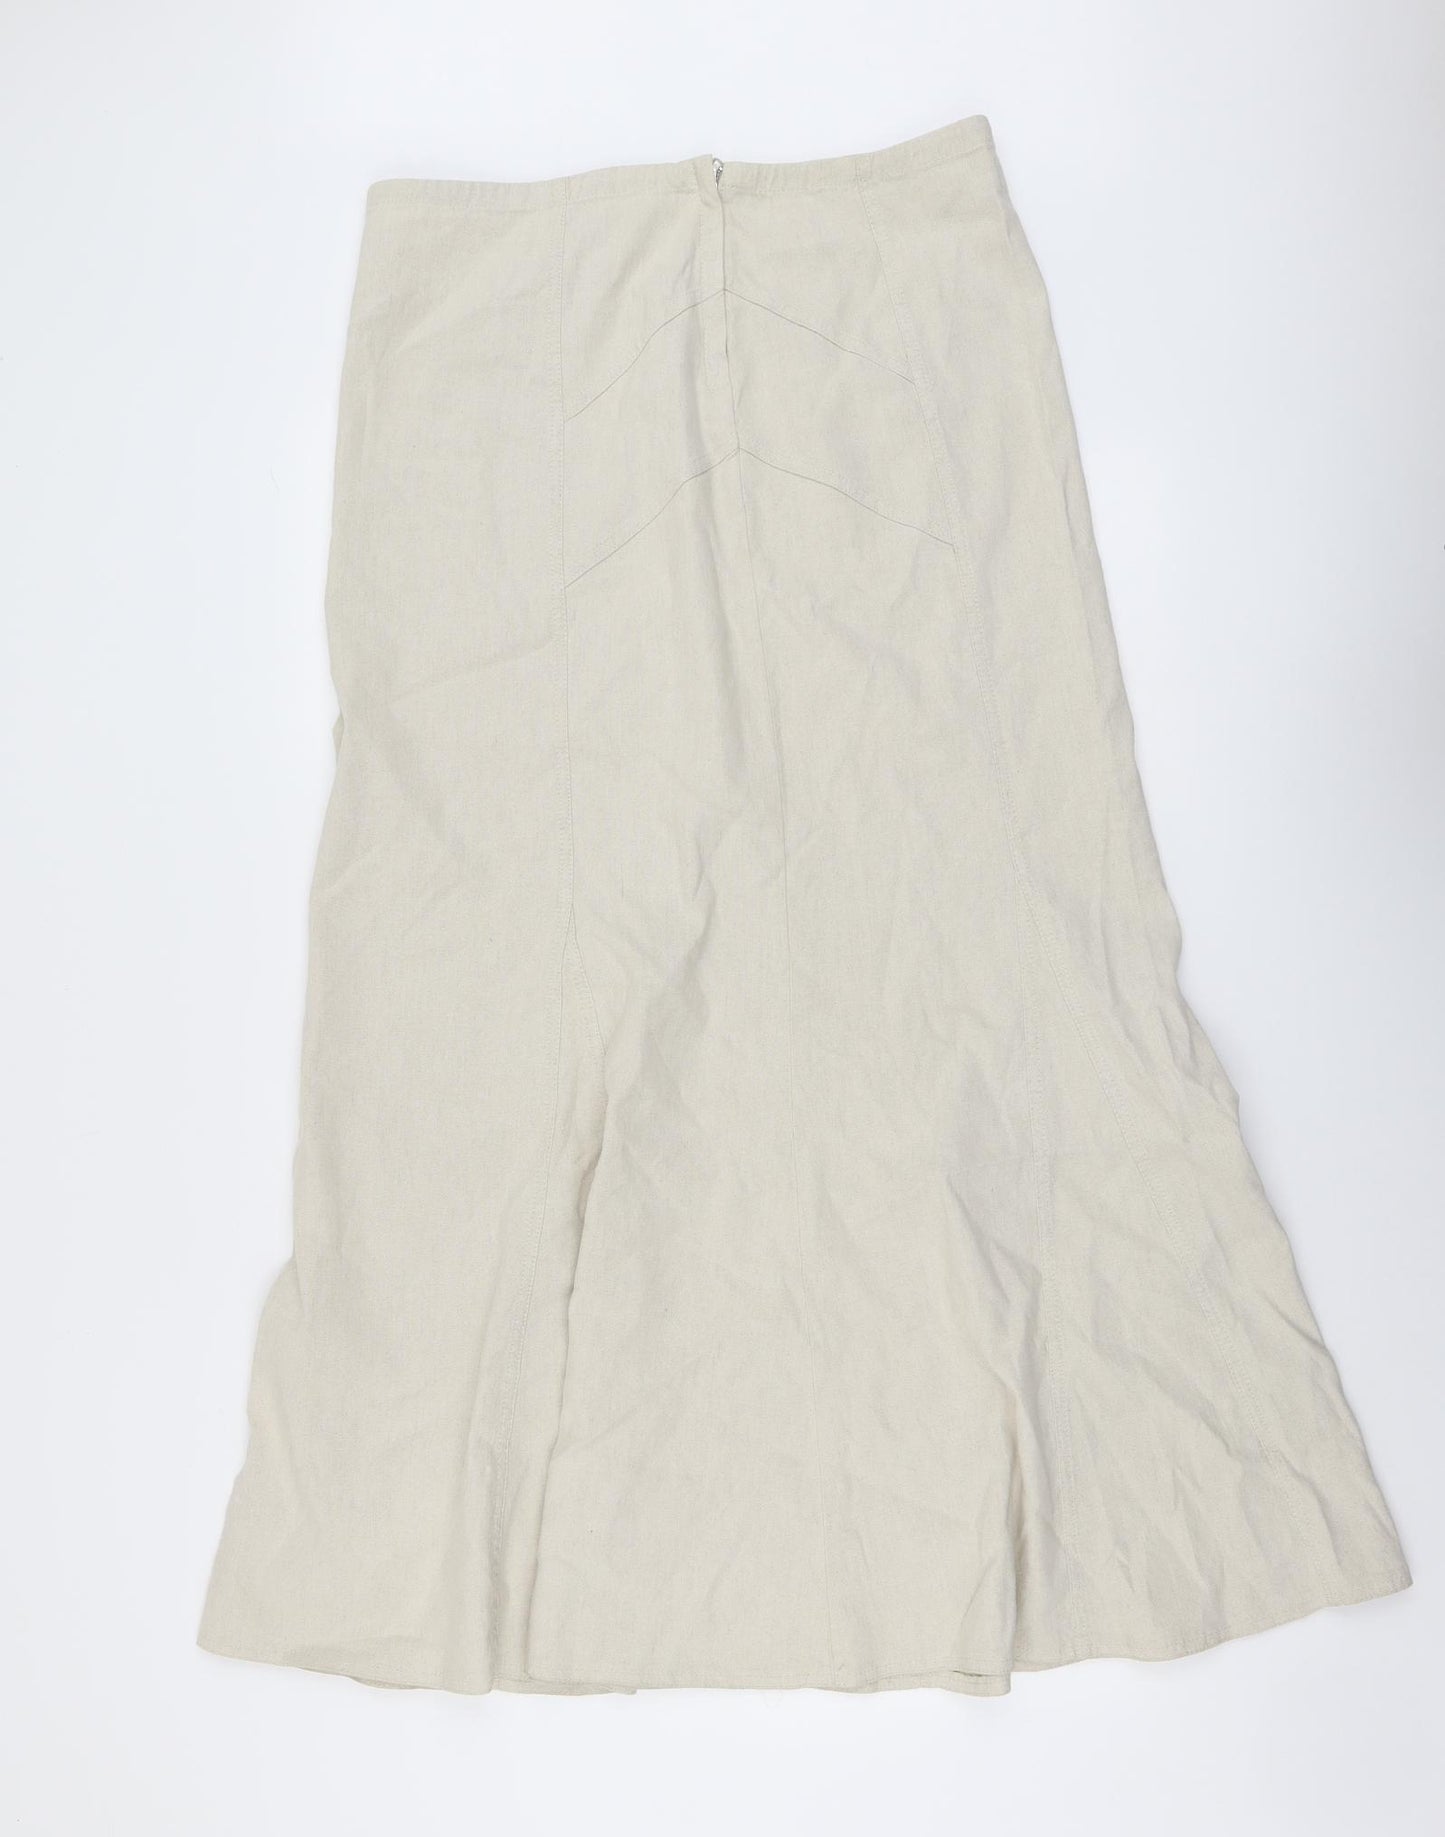 Per Una Womens Beige Linen A-Line Skirt Size 14 Zip